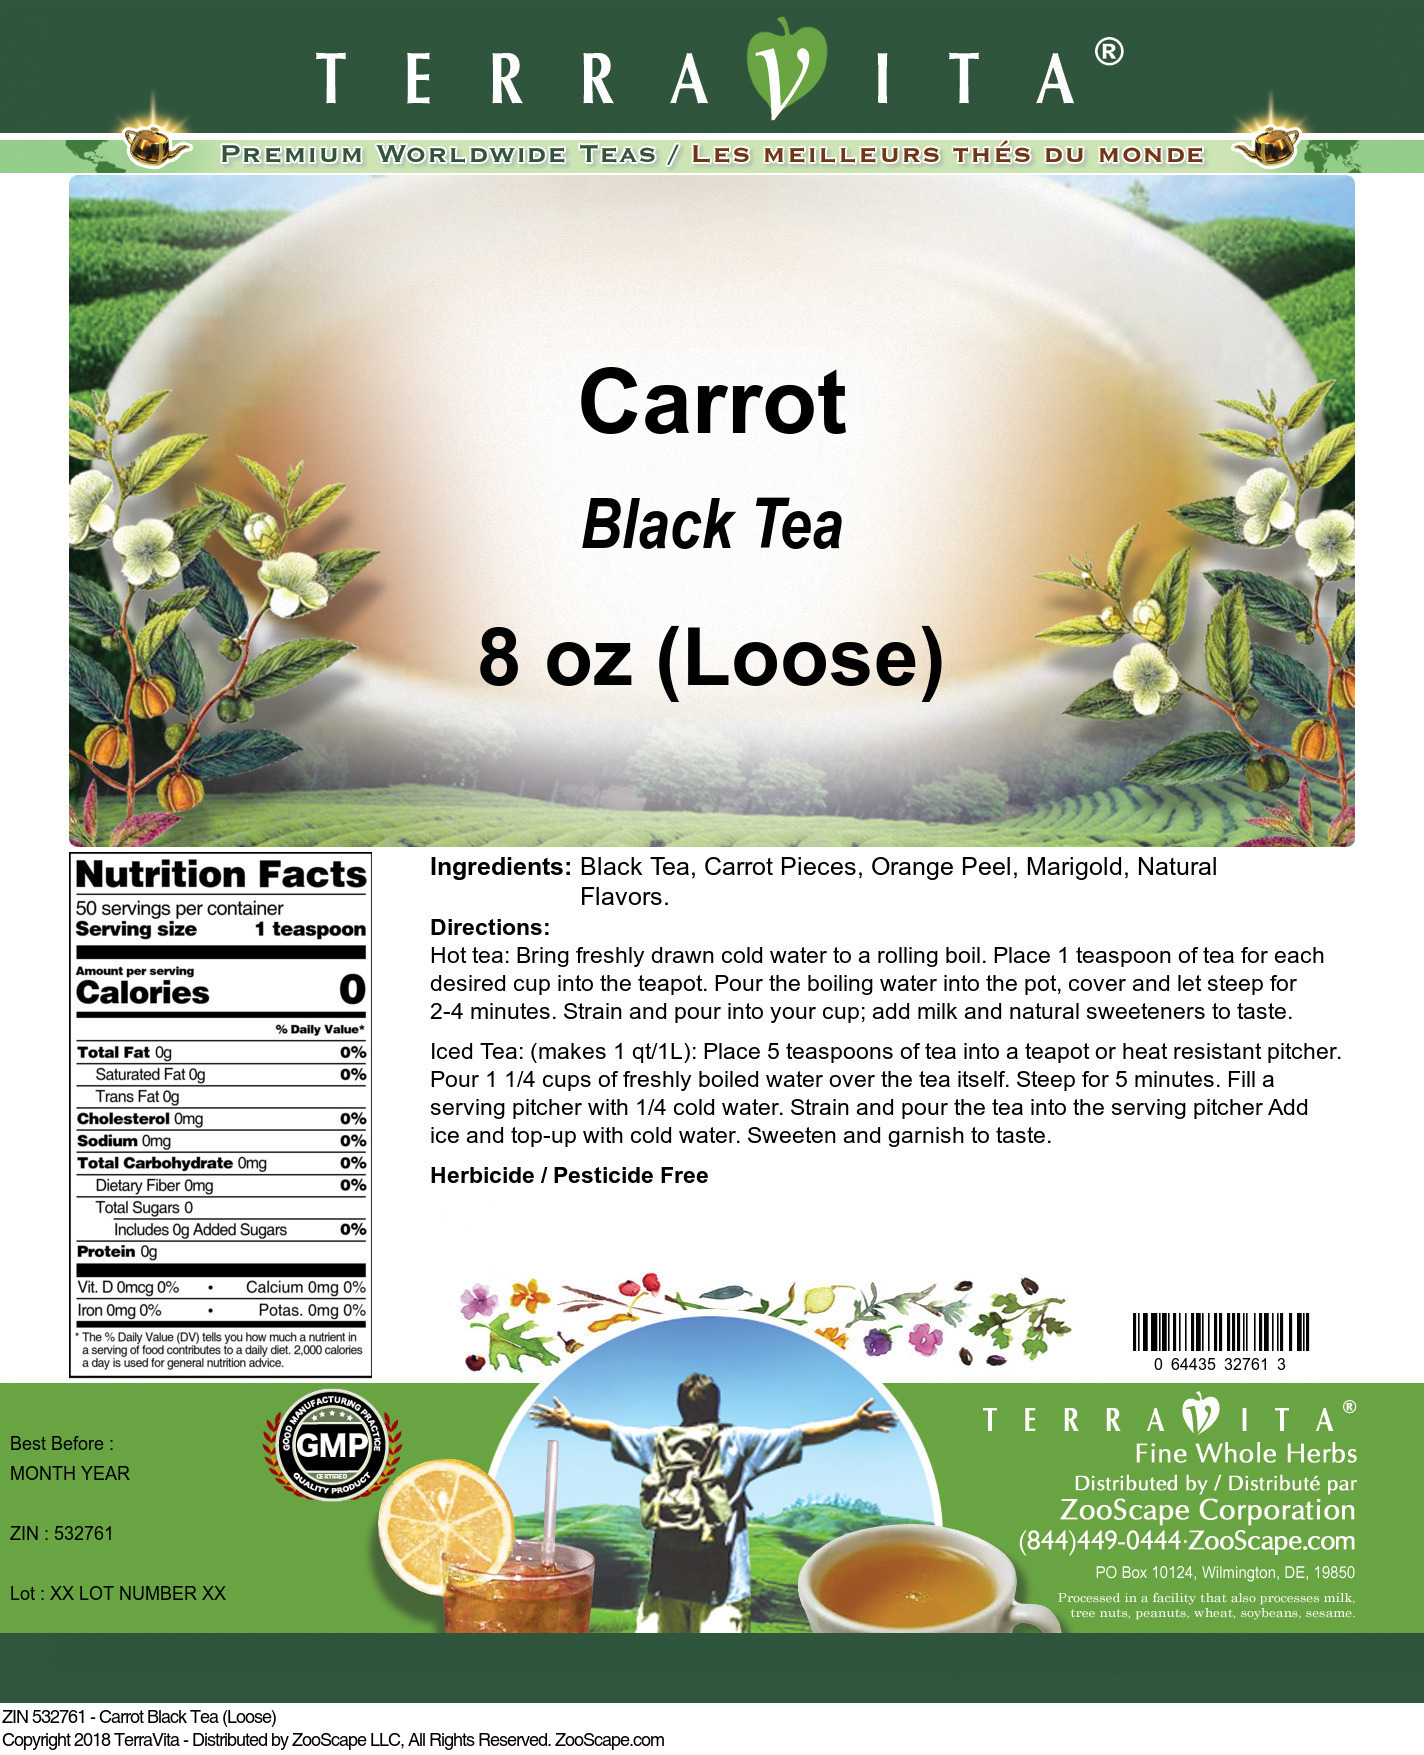 Carrot Black Tea (Loose) - Label